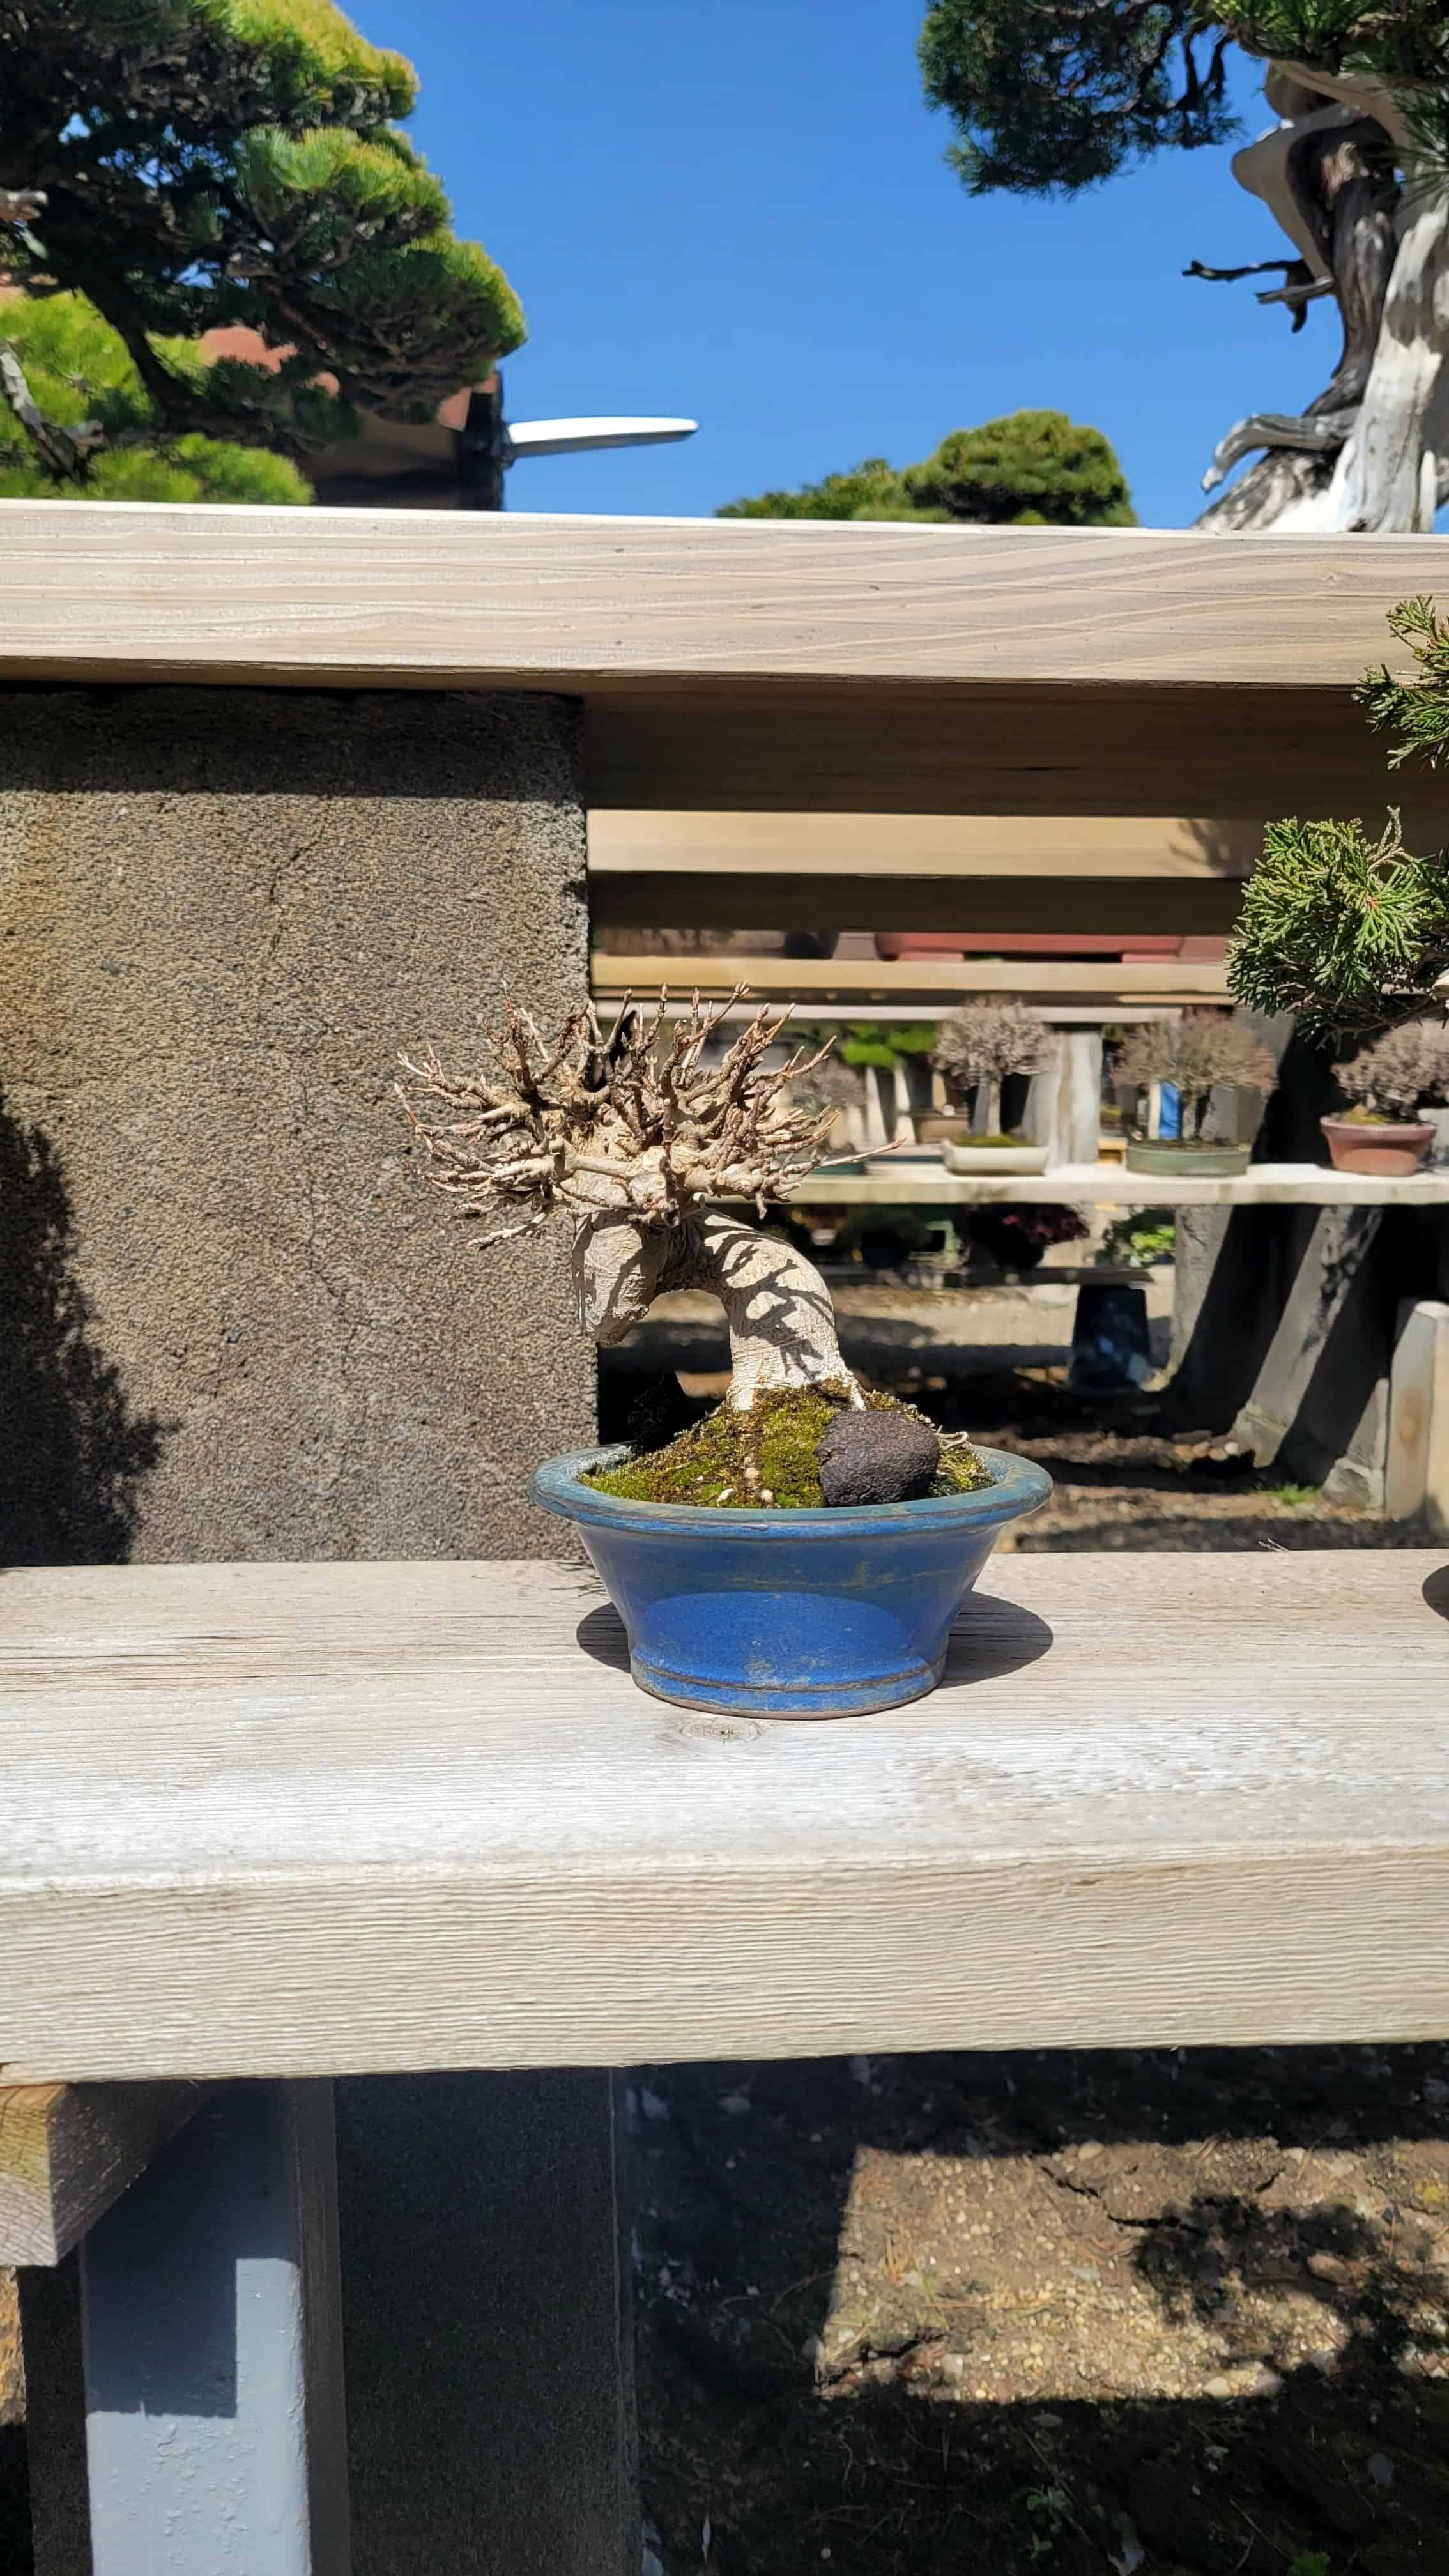 A maple bonsai tree from kimura in Japan